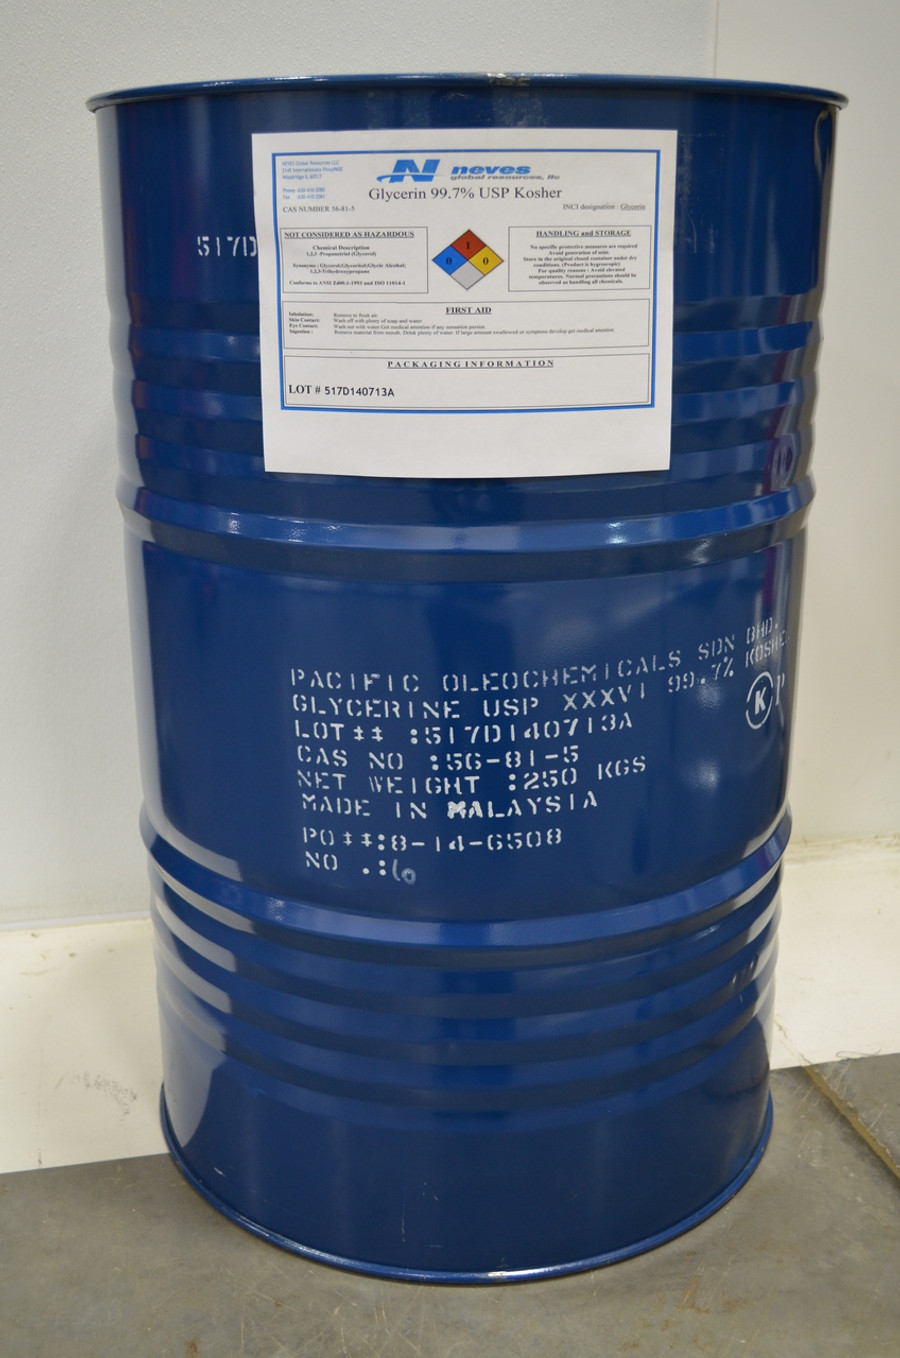 99.7% USP Kosher NonGMO Palm Glycerin ($1.15/lb for 4-55 gallon / 551 lb net) STEEL Drums ISO cGMP - KLK Brand